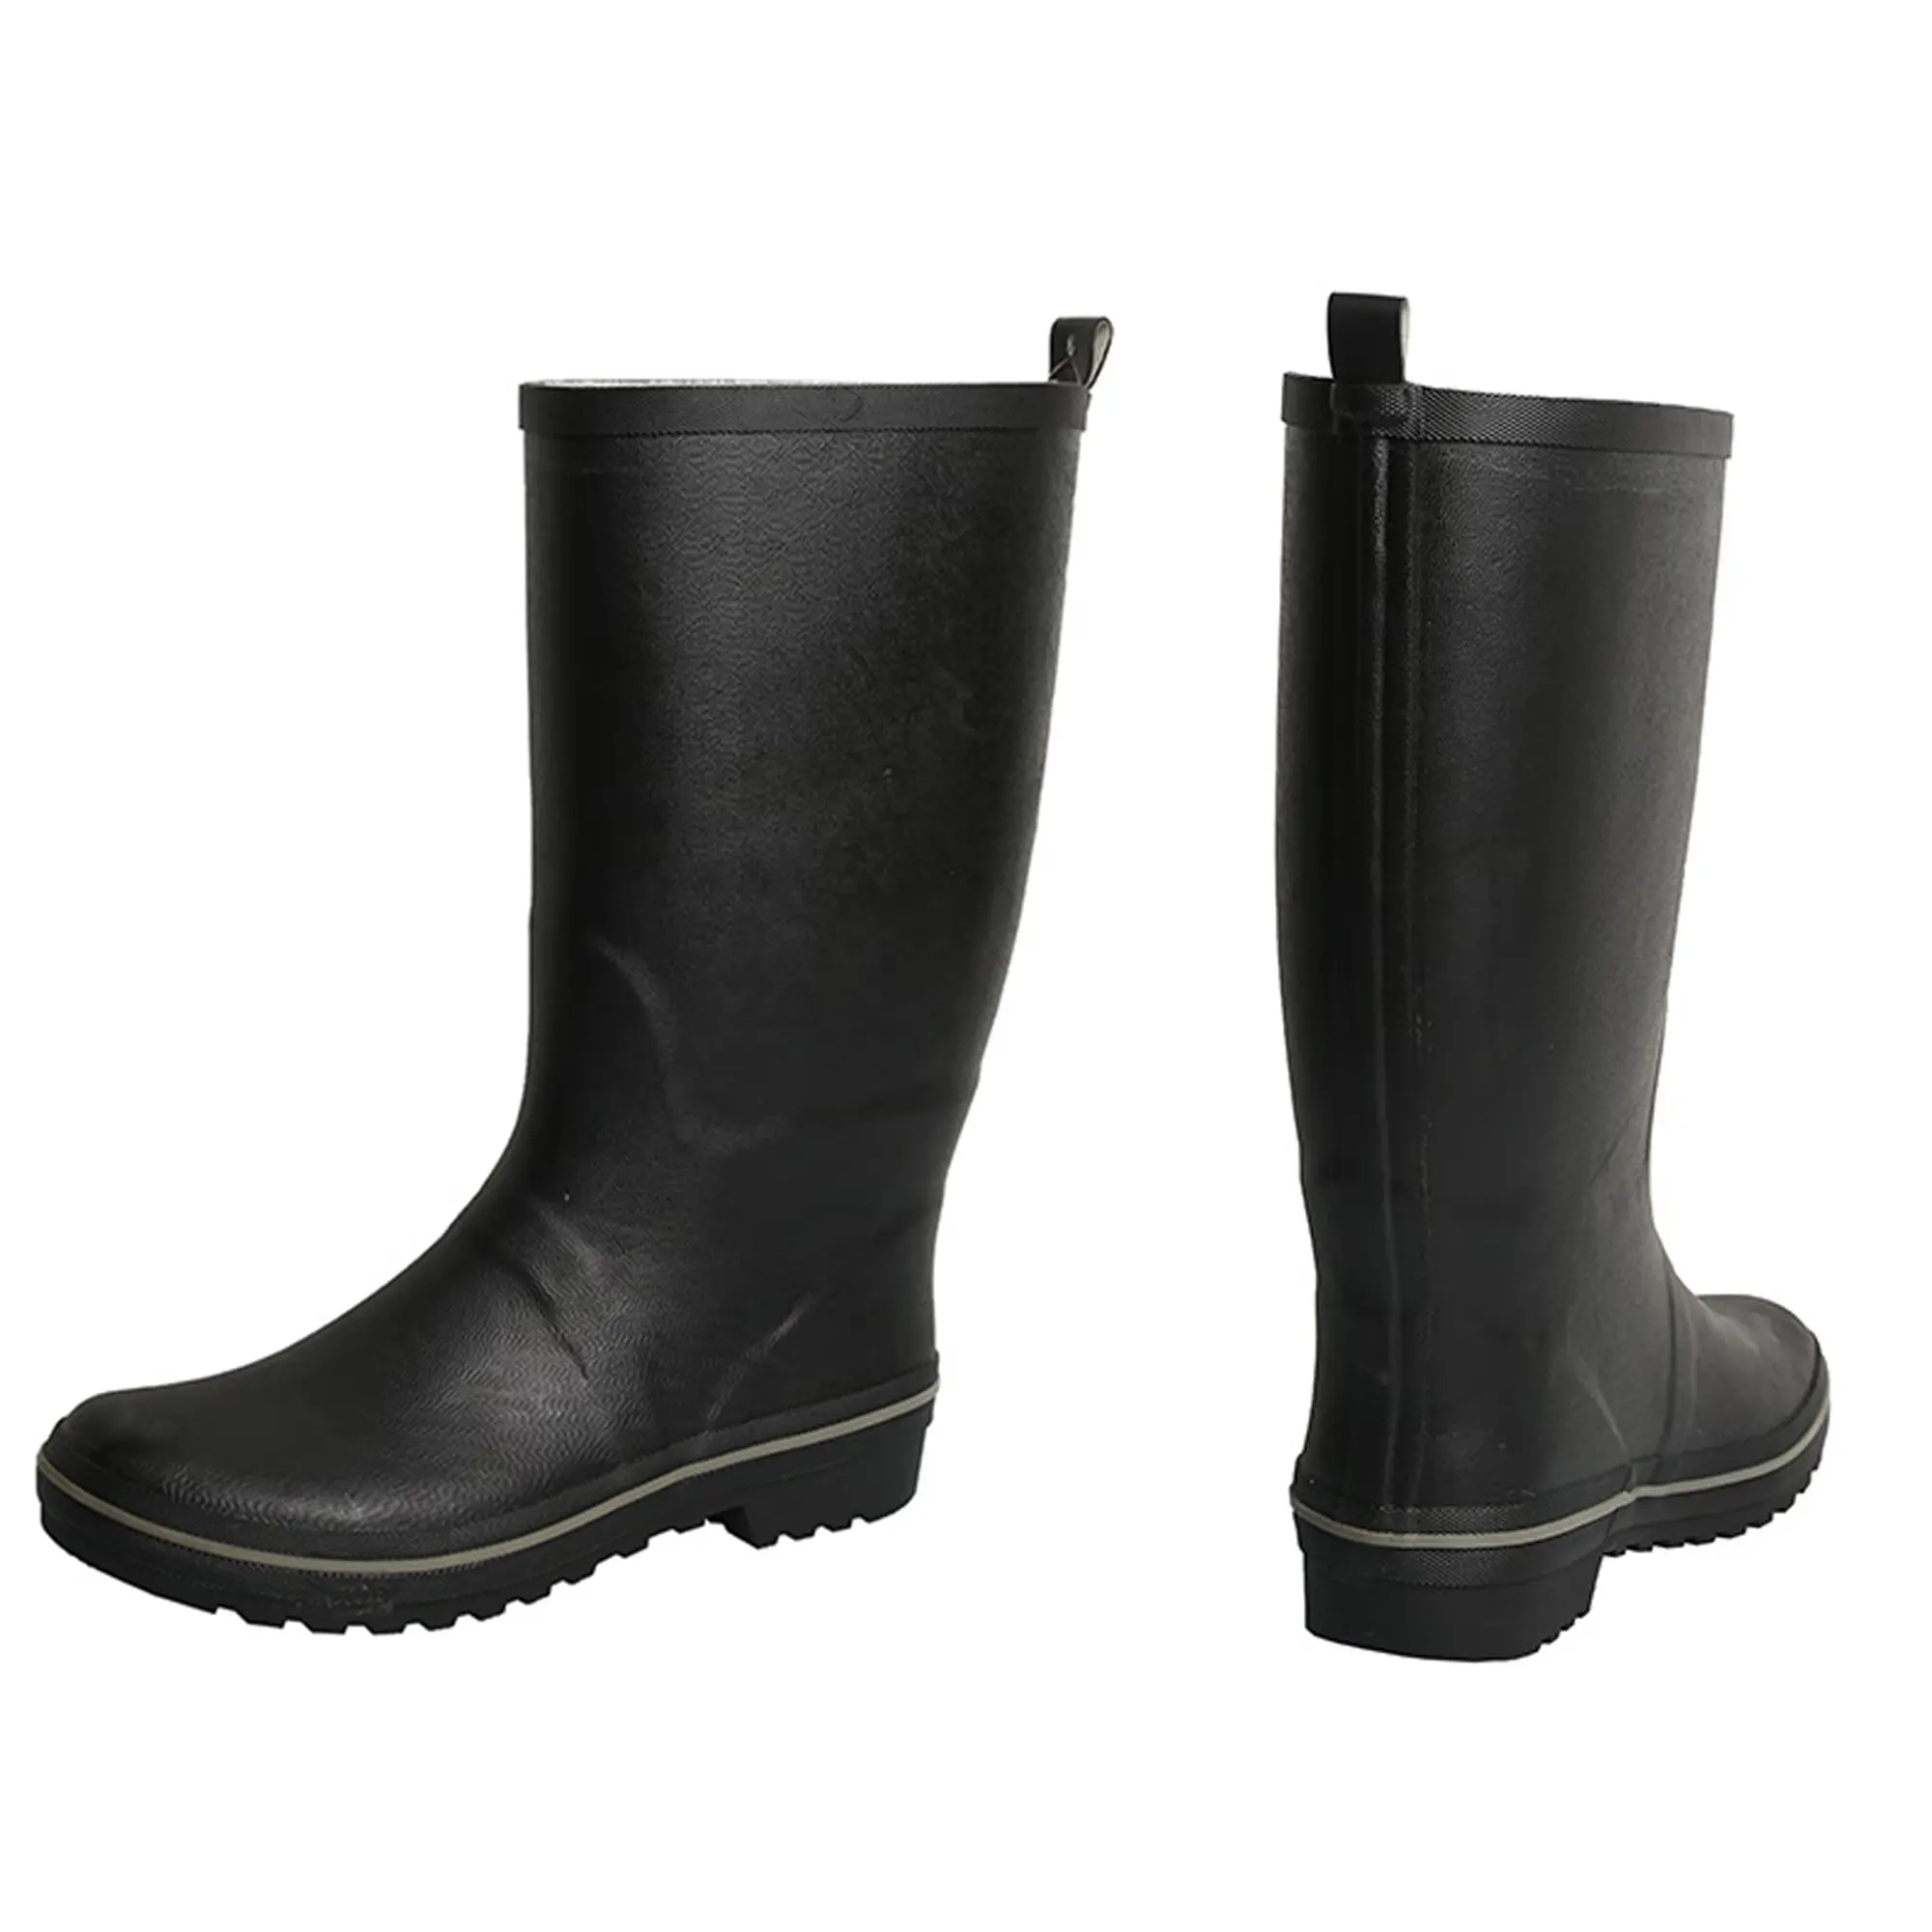 Designed unisex custom wellington black gum boots half shoes for men rubber waterproof rain boots